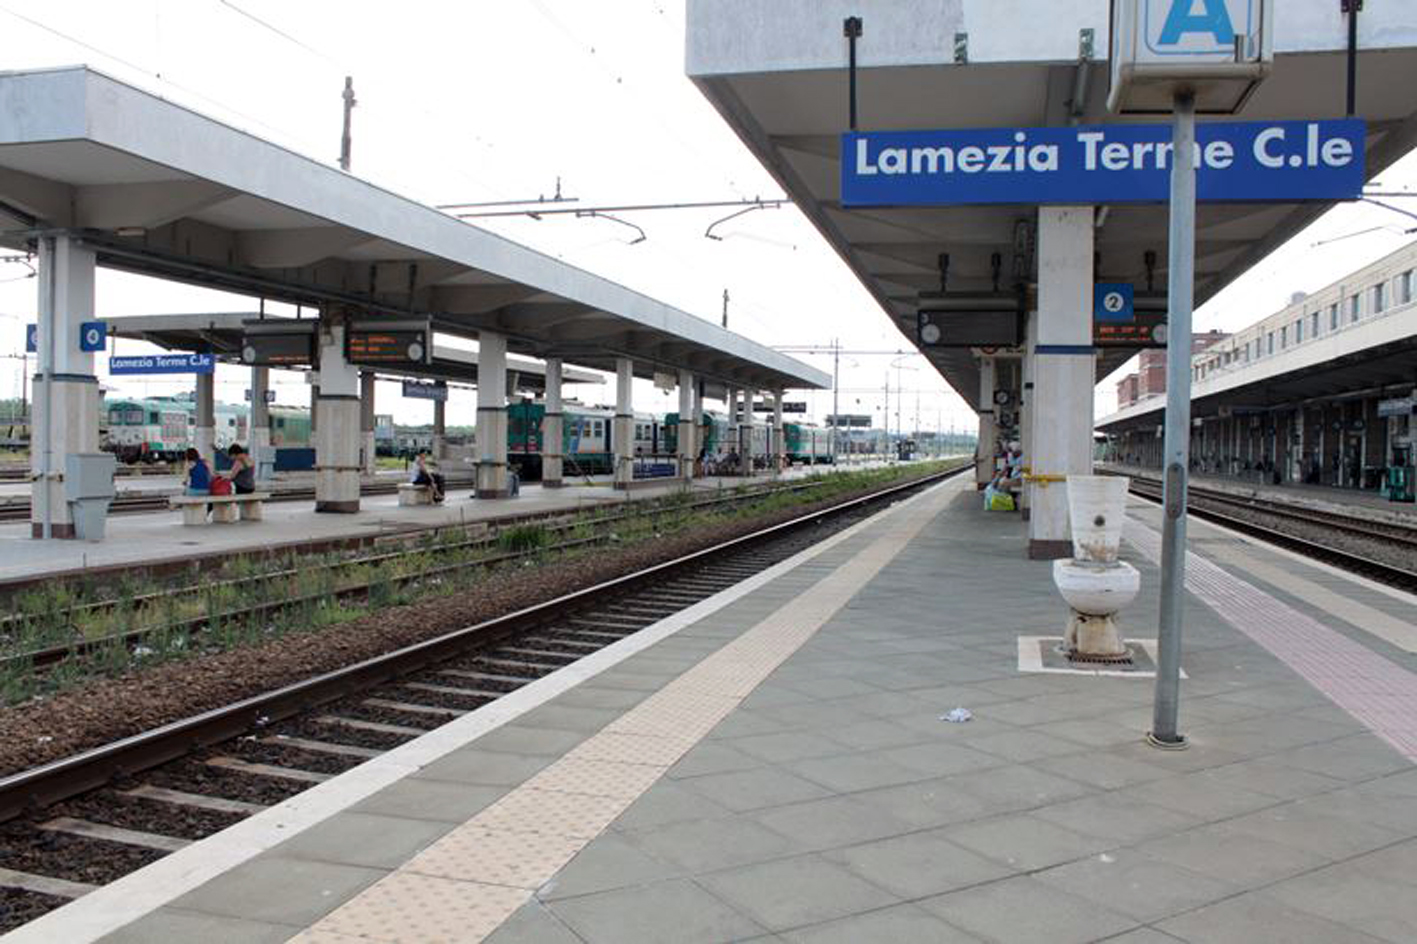 treno-lamezia-terme-centrale